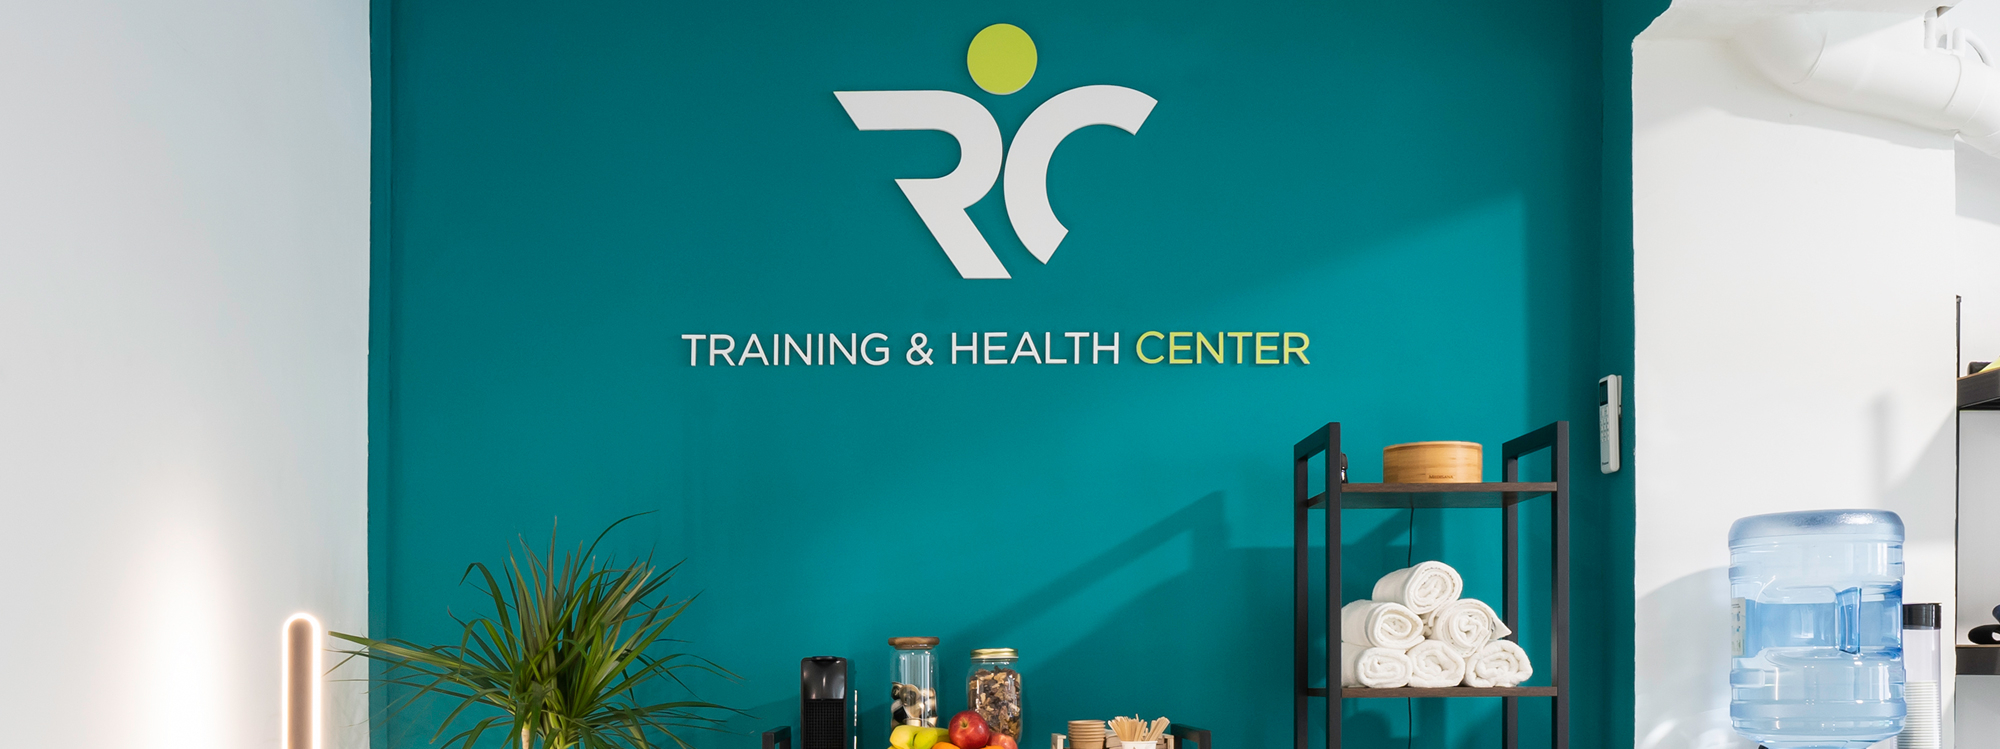 RC Training Center